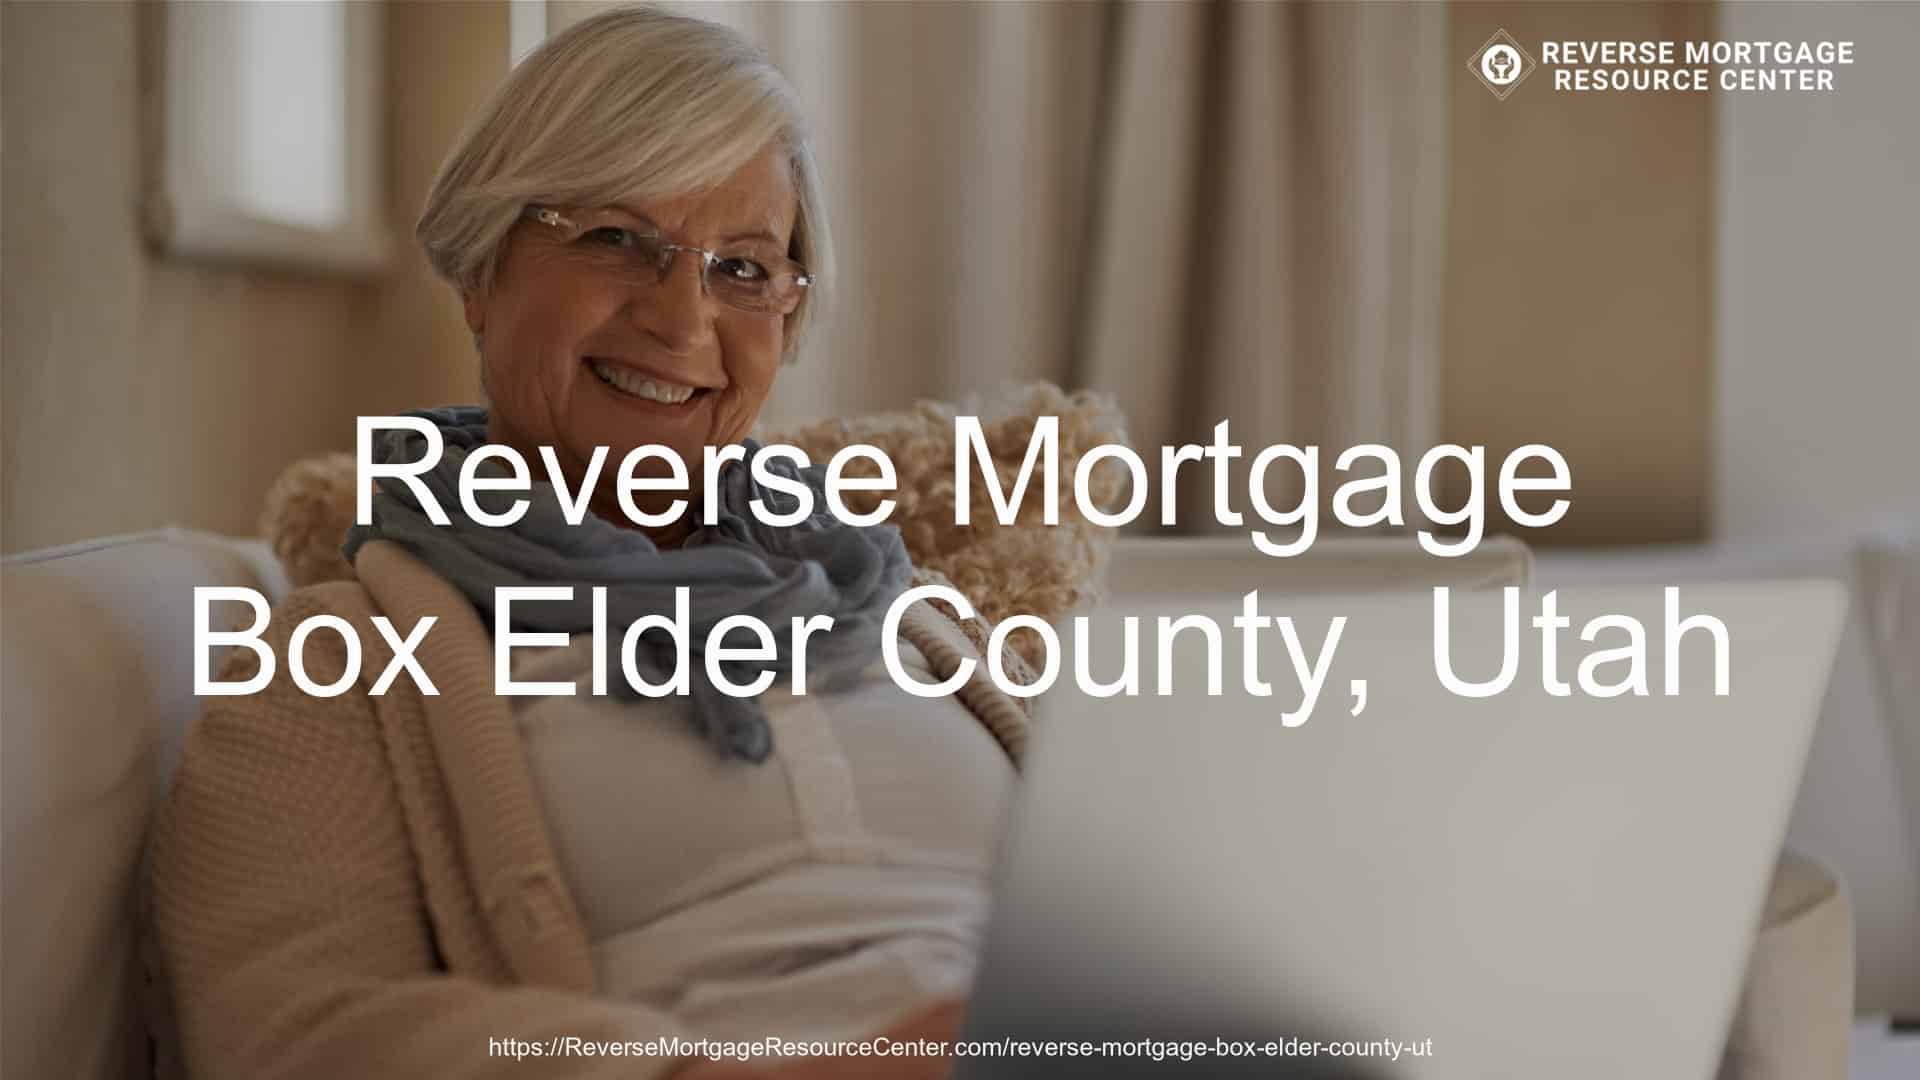 Reverse Mortgage Loans in Box Elder County Utah